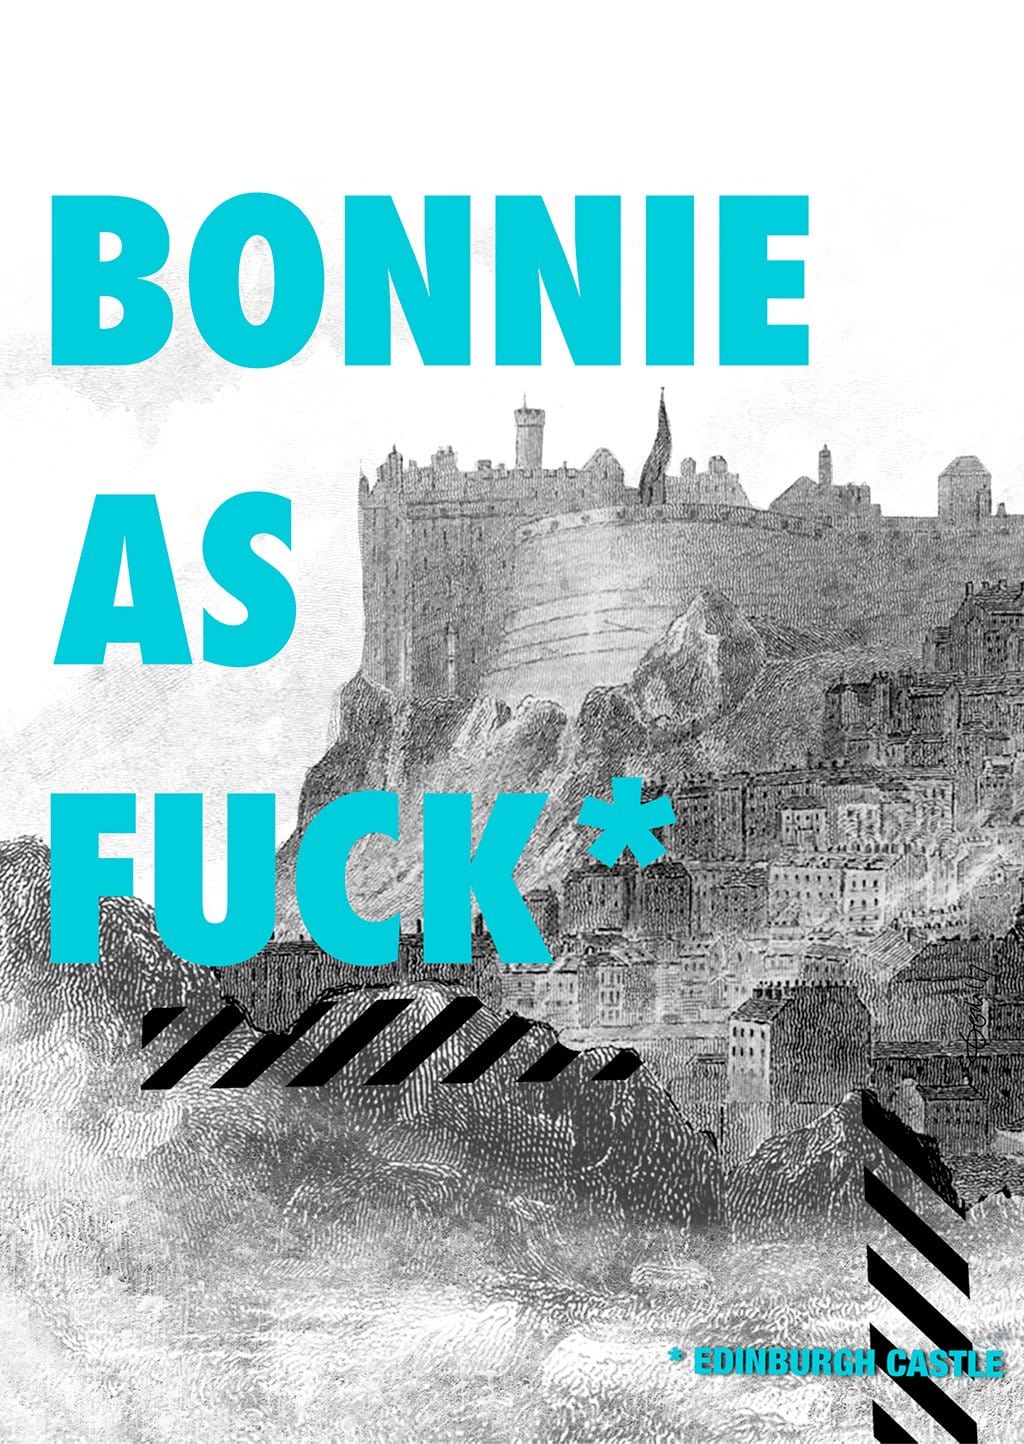 Bonnie Edinburgh Castle Greeting Card Scotland Greeting Cards Card